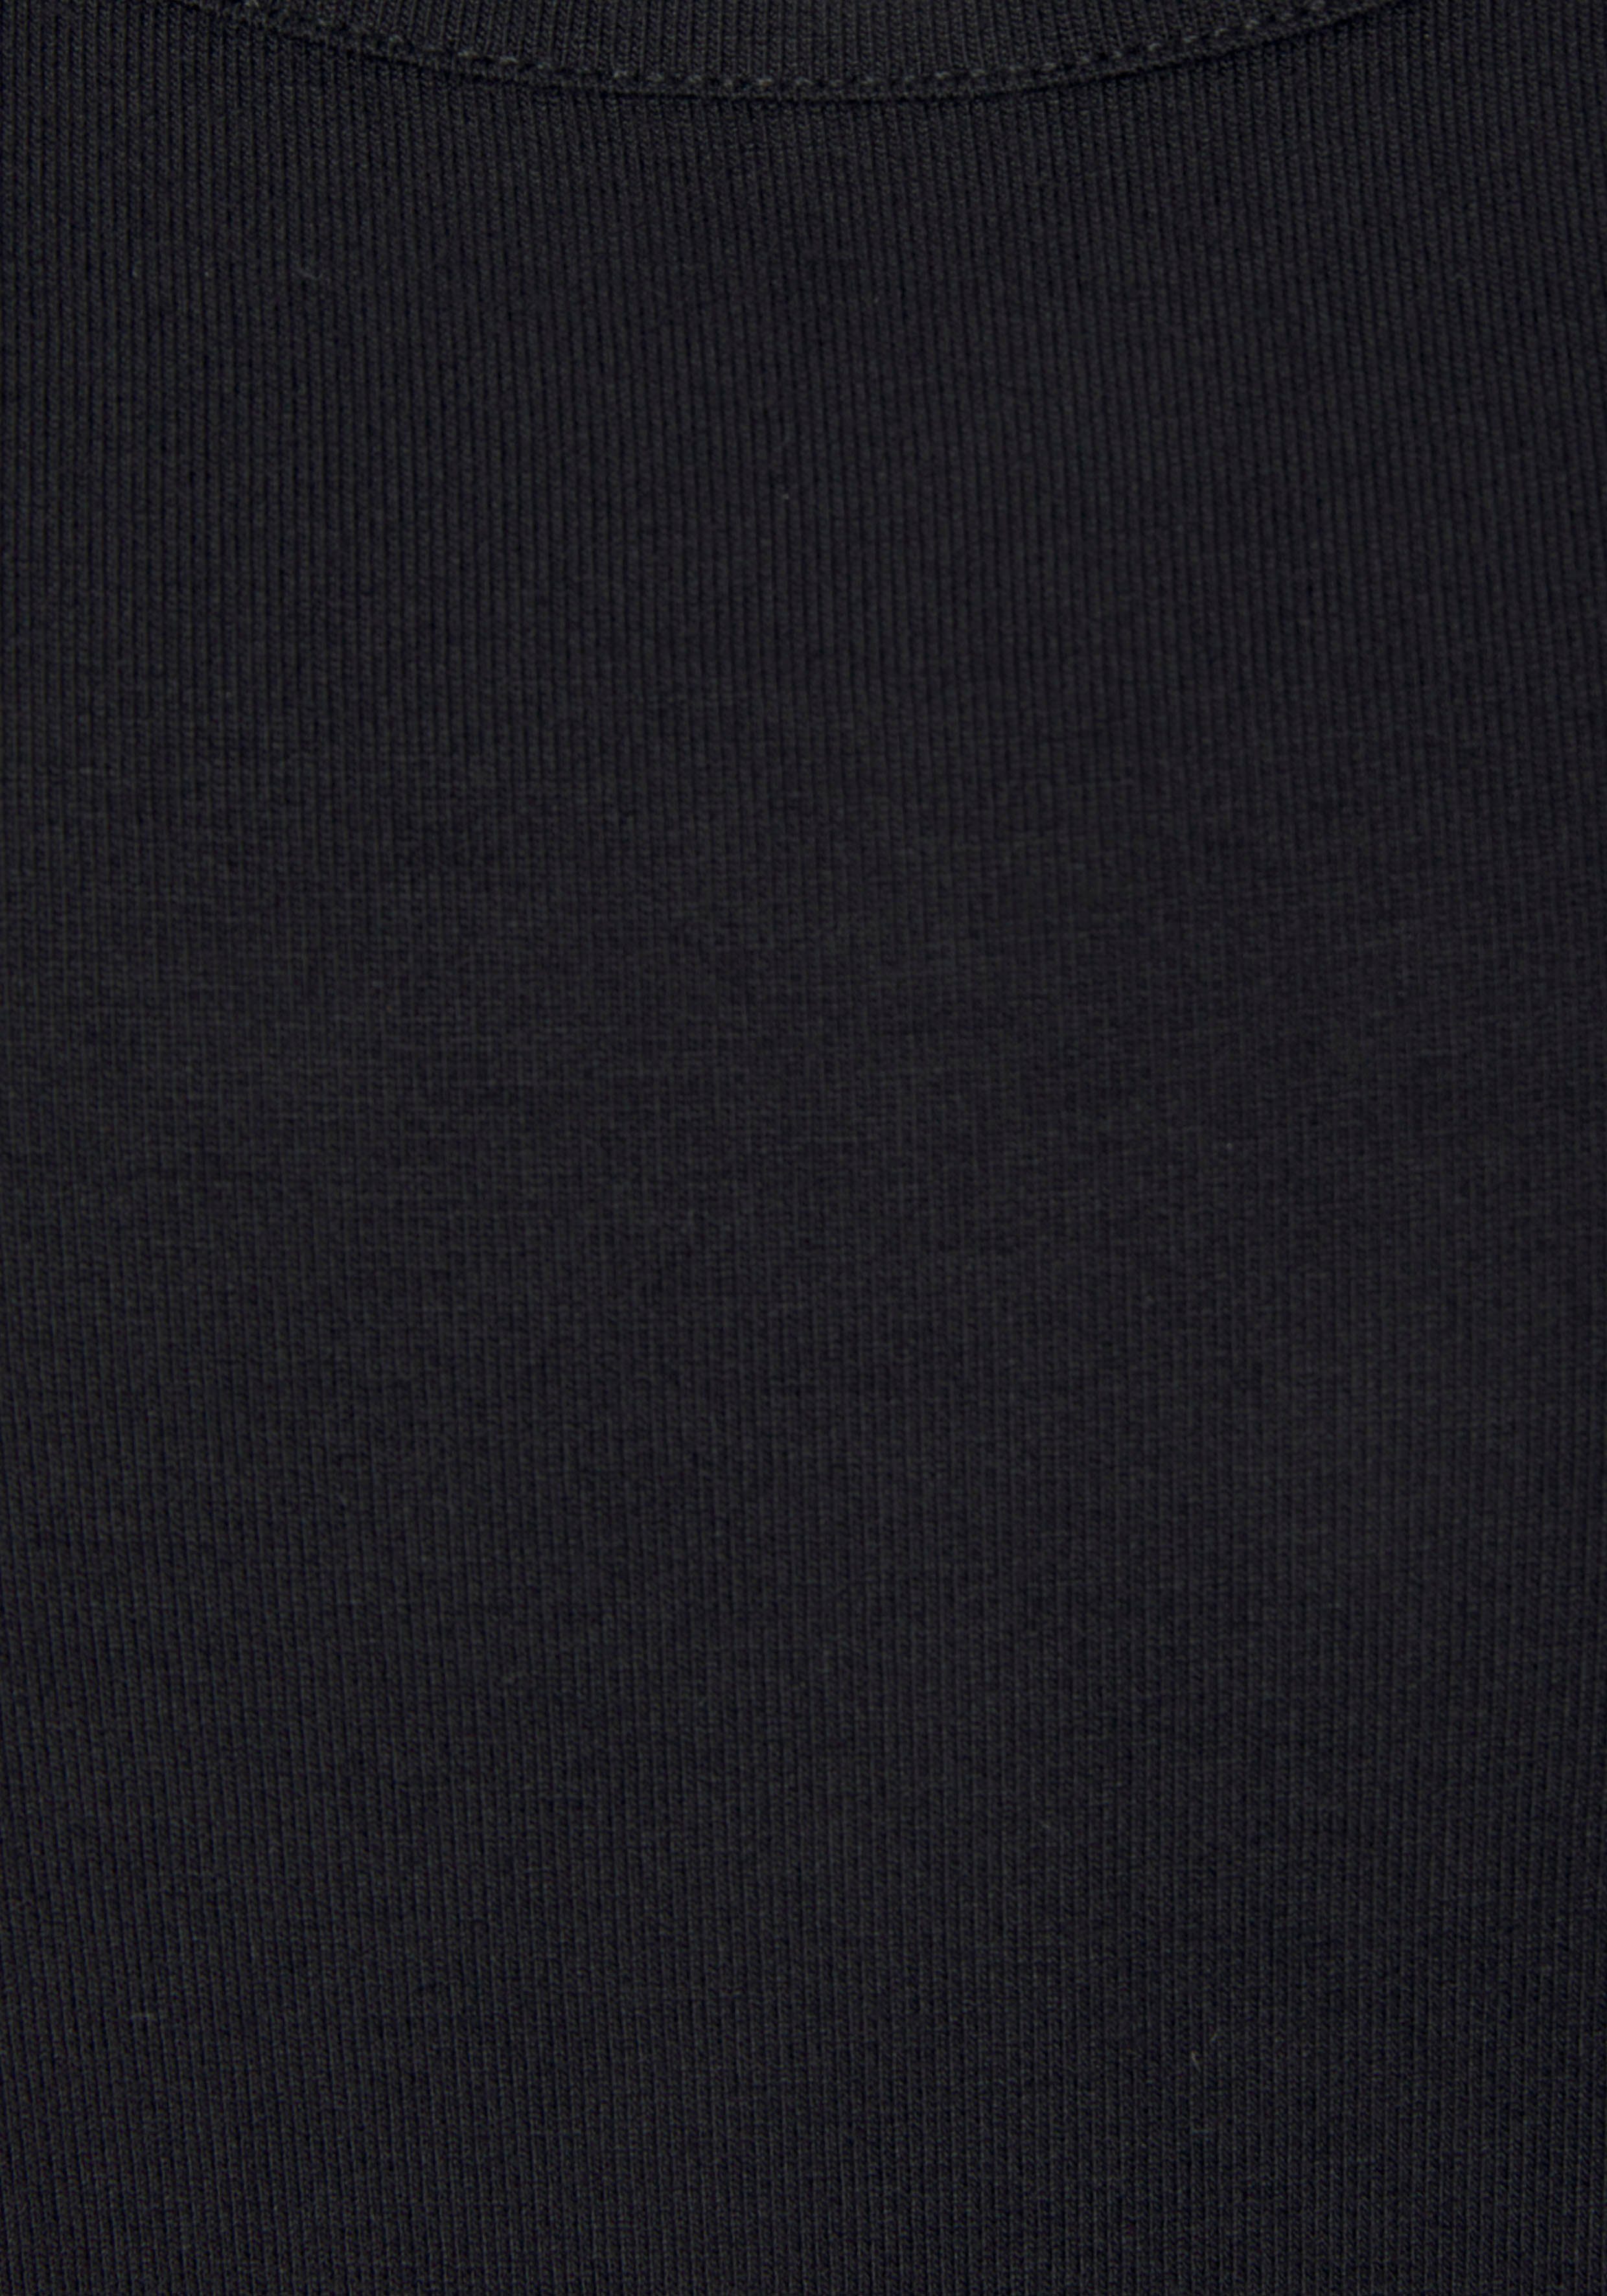 Schwarz weicher Viscosemischung aus LASCANA T-Shirt